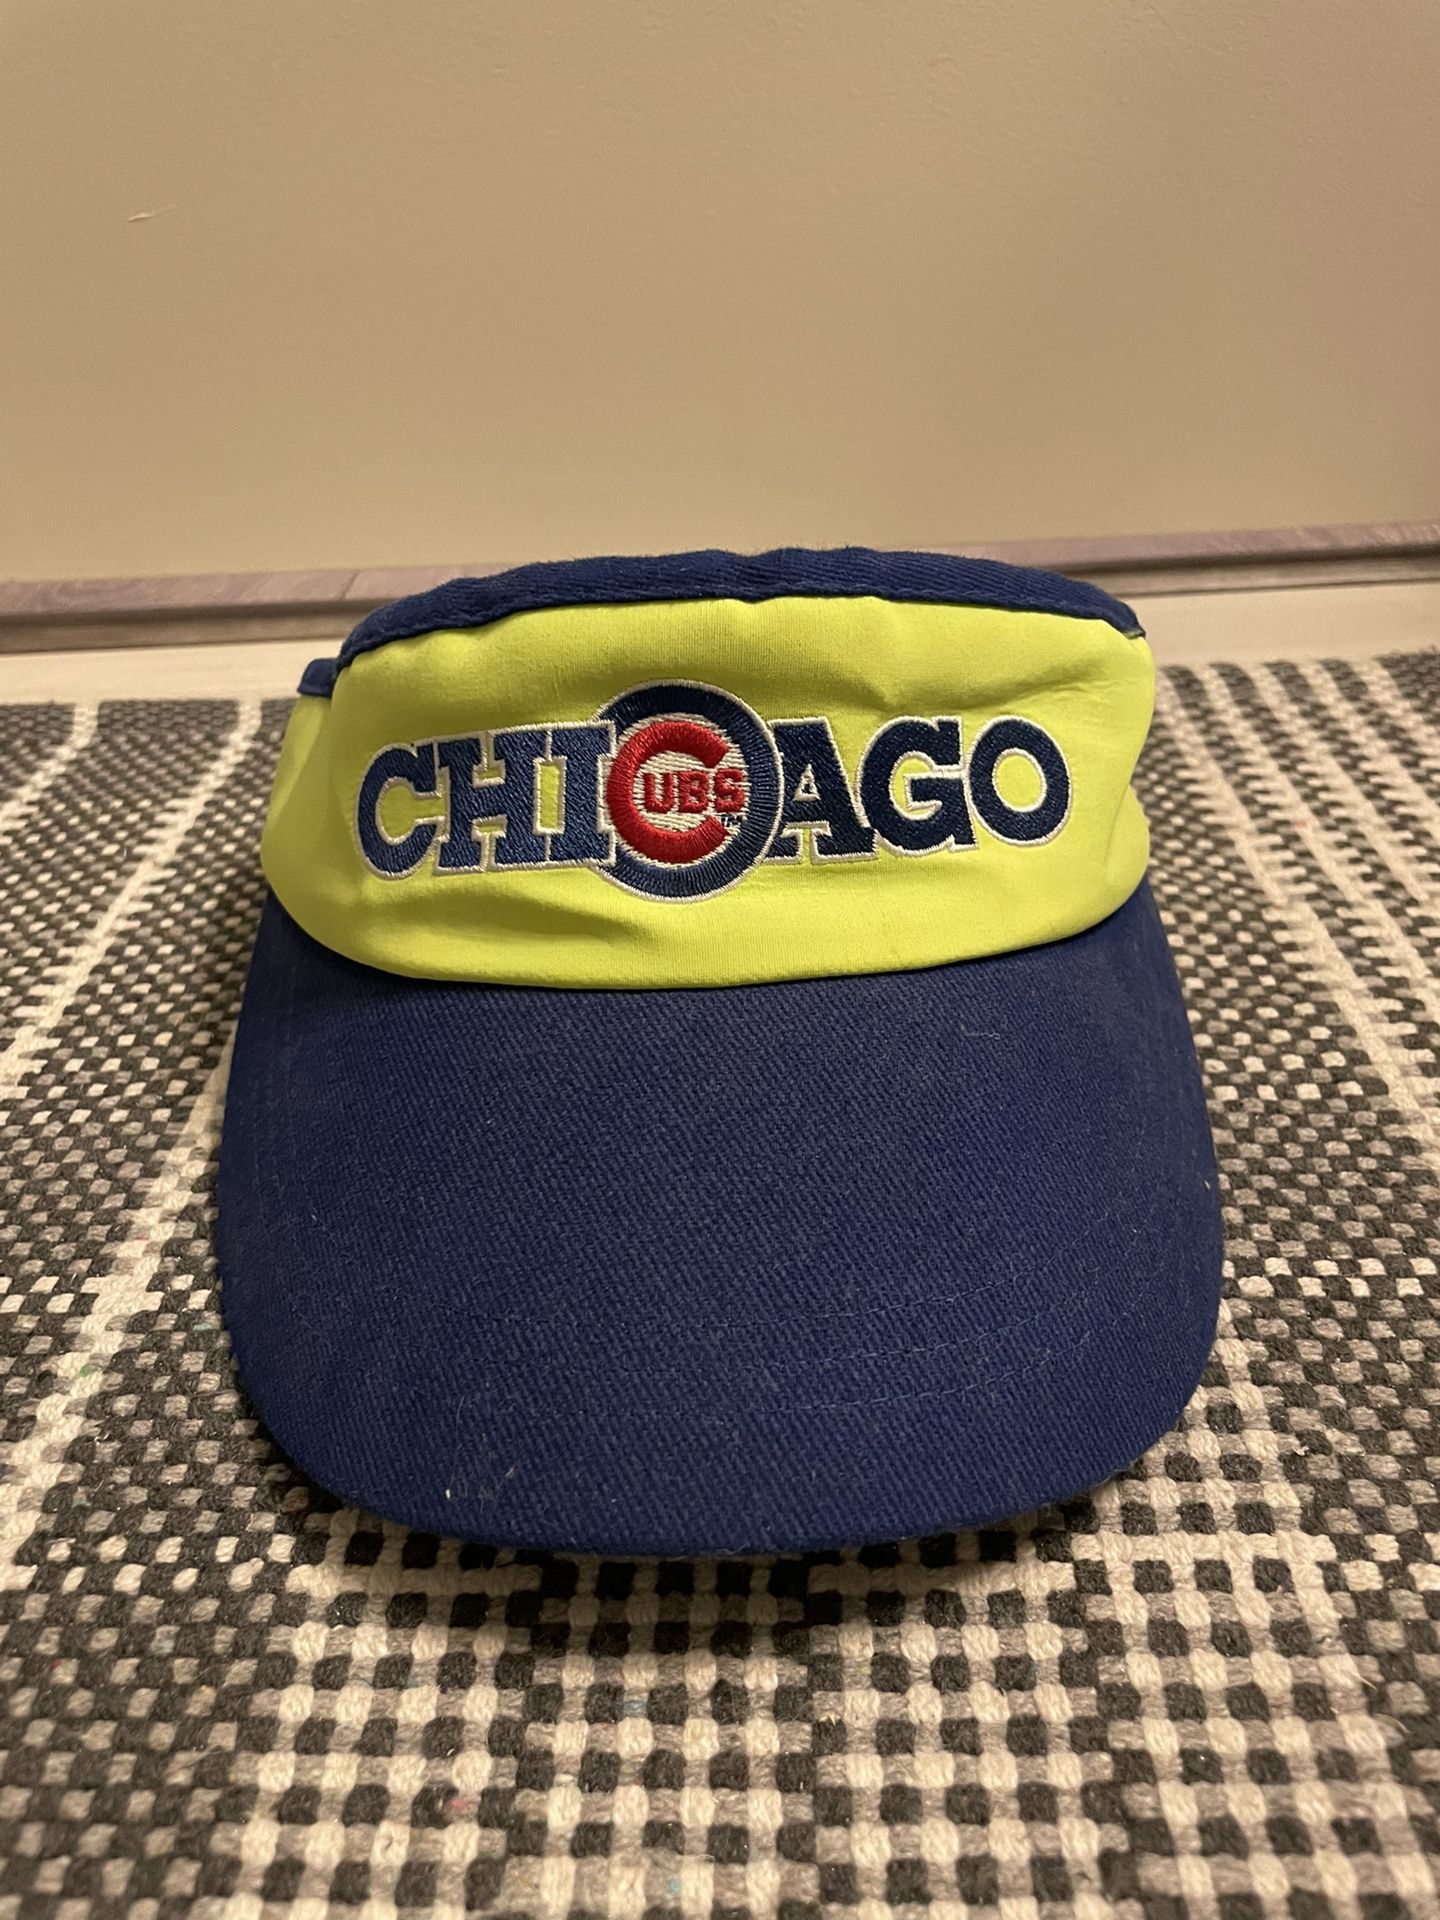 Chicago Cubs Budweiser Hat $30